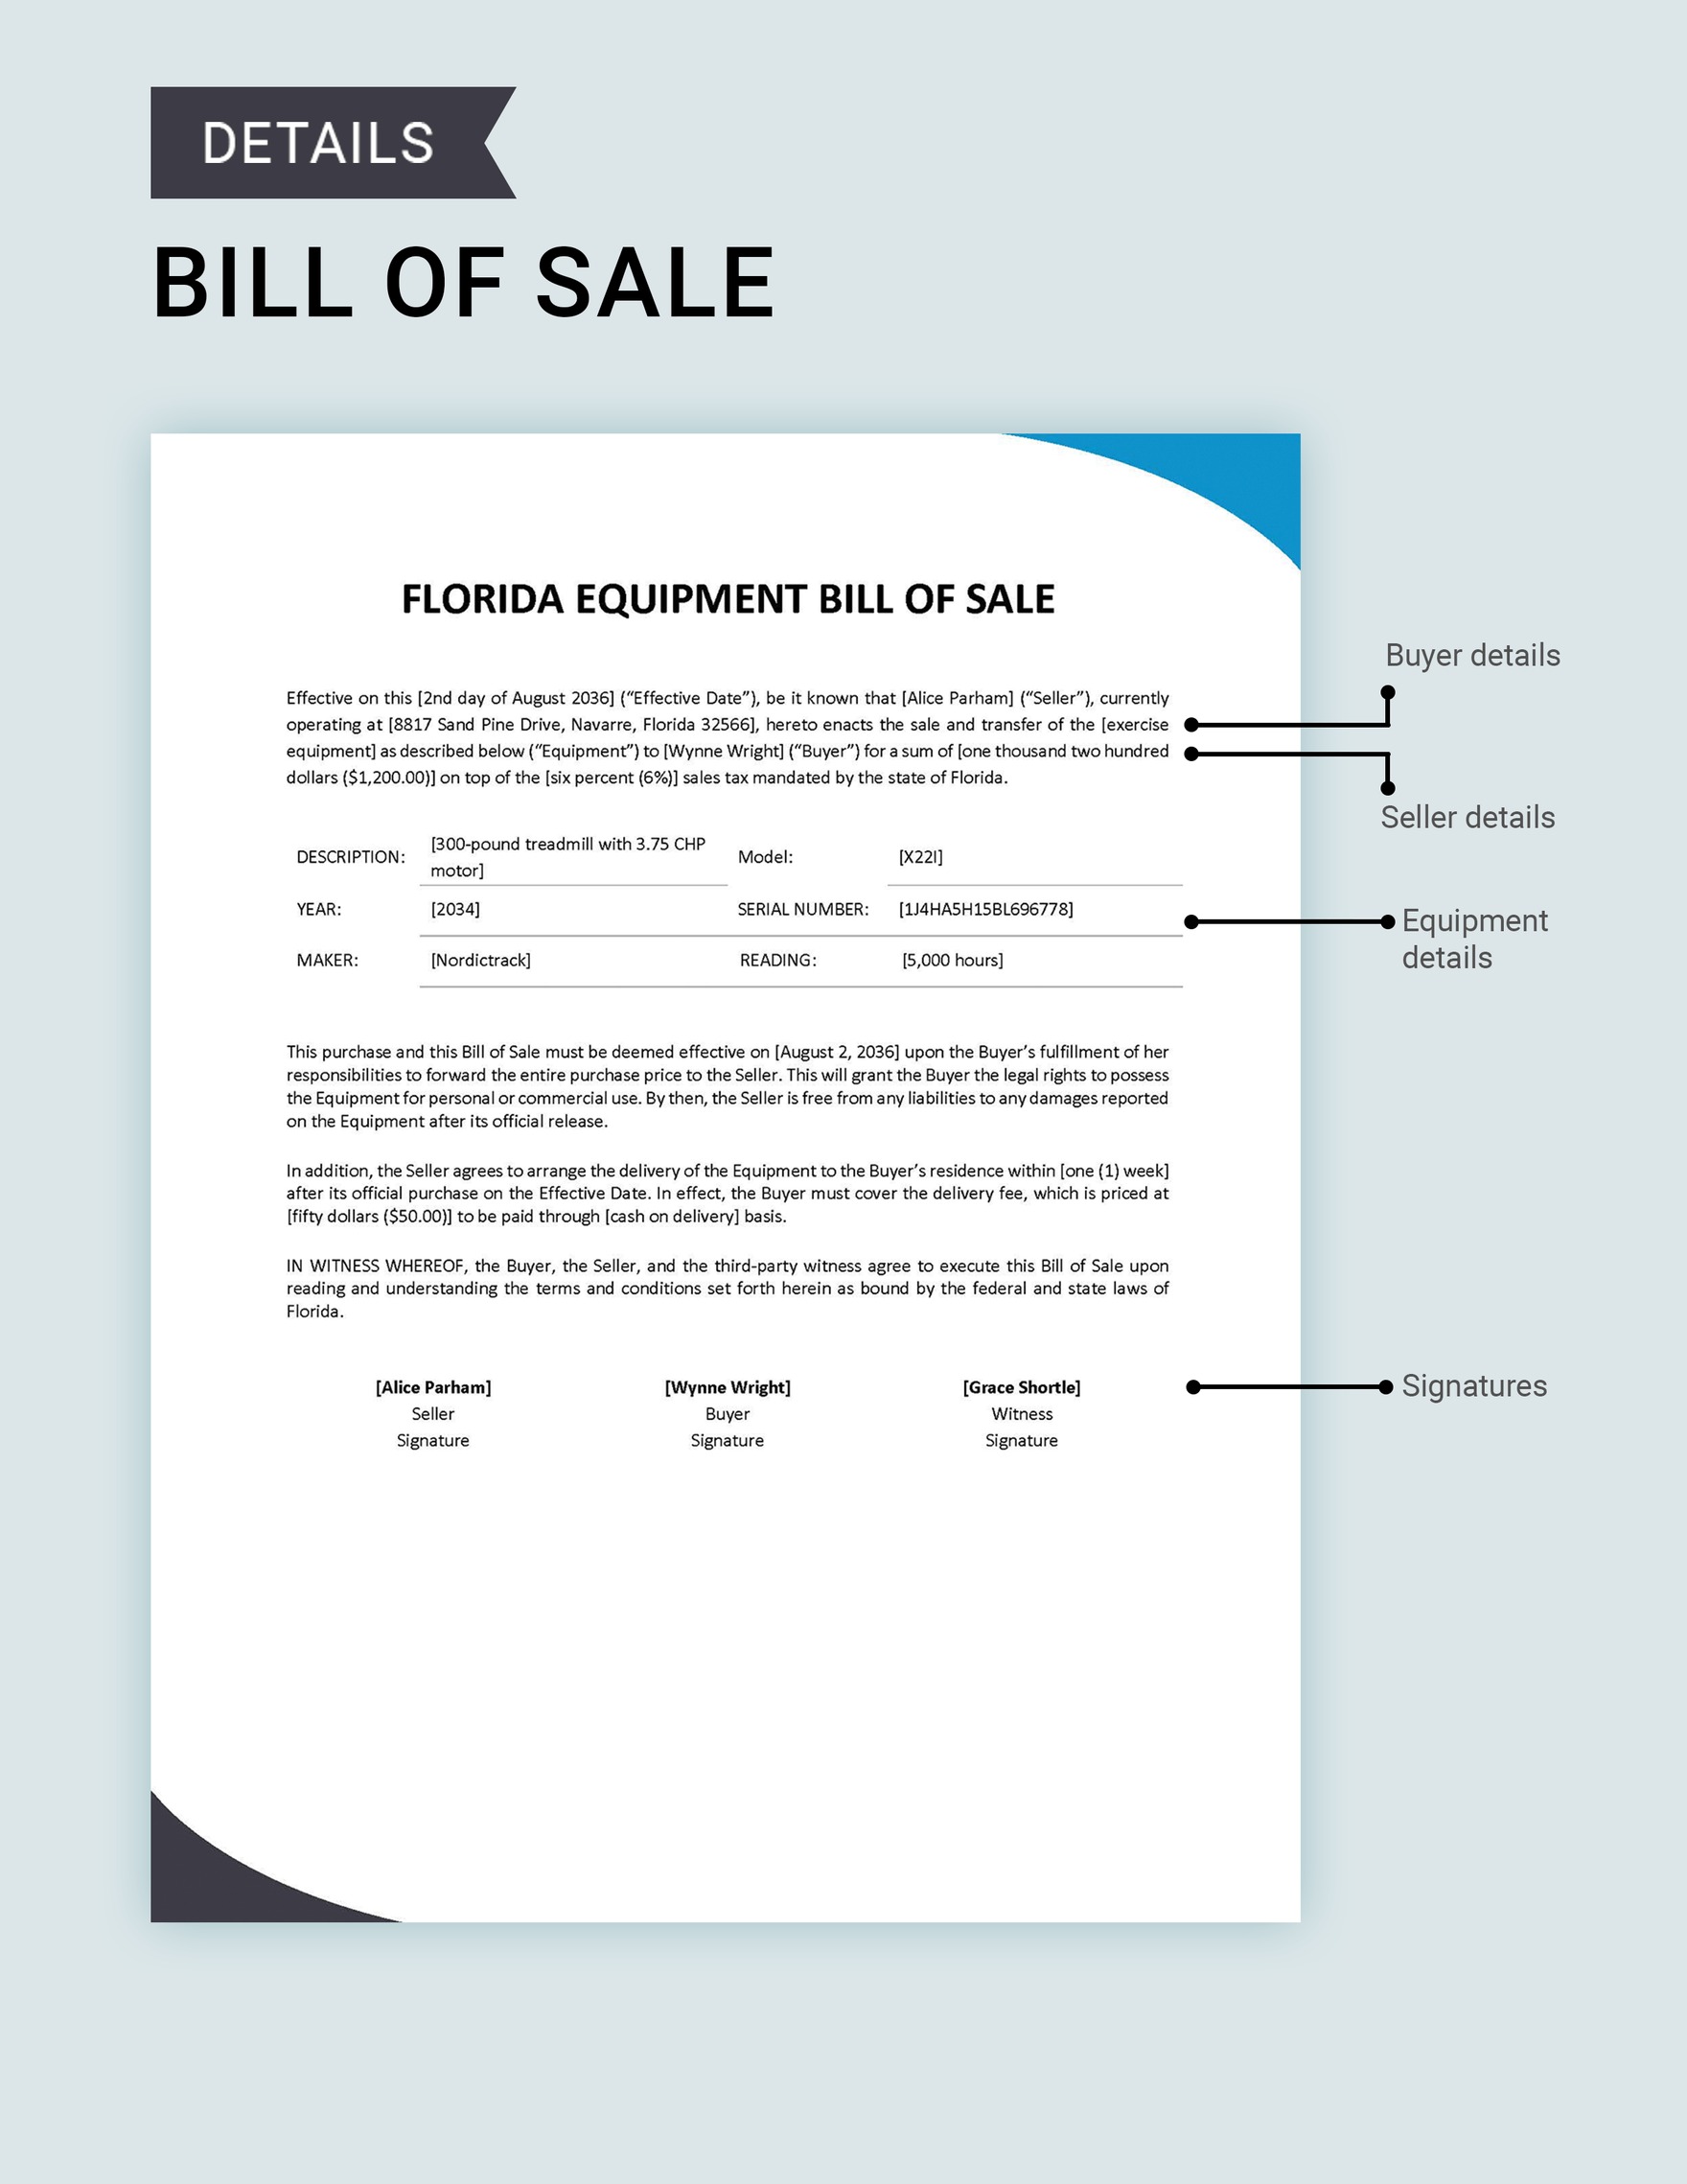 Florida Equipment Bill of Sale Template